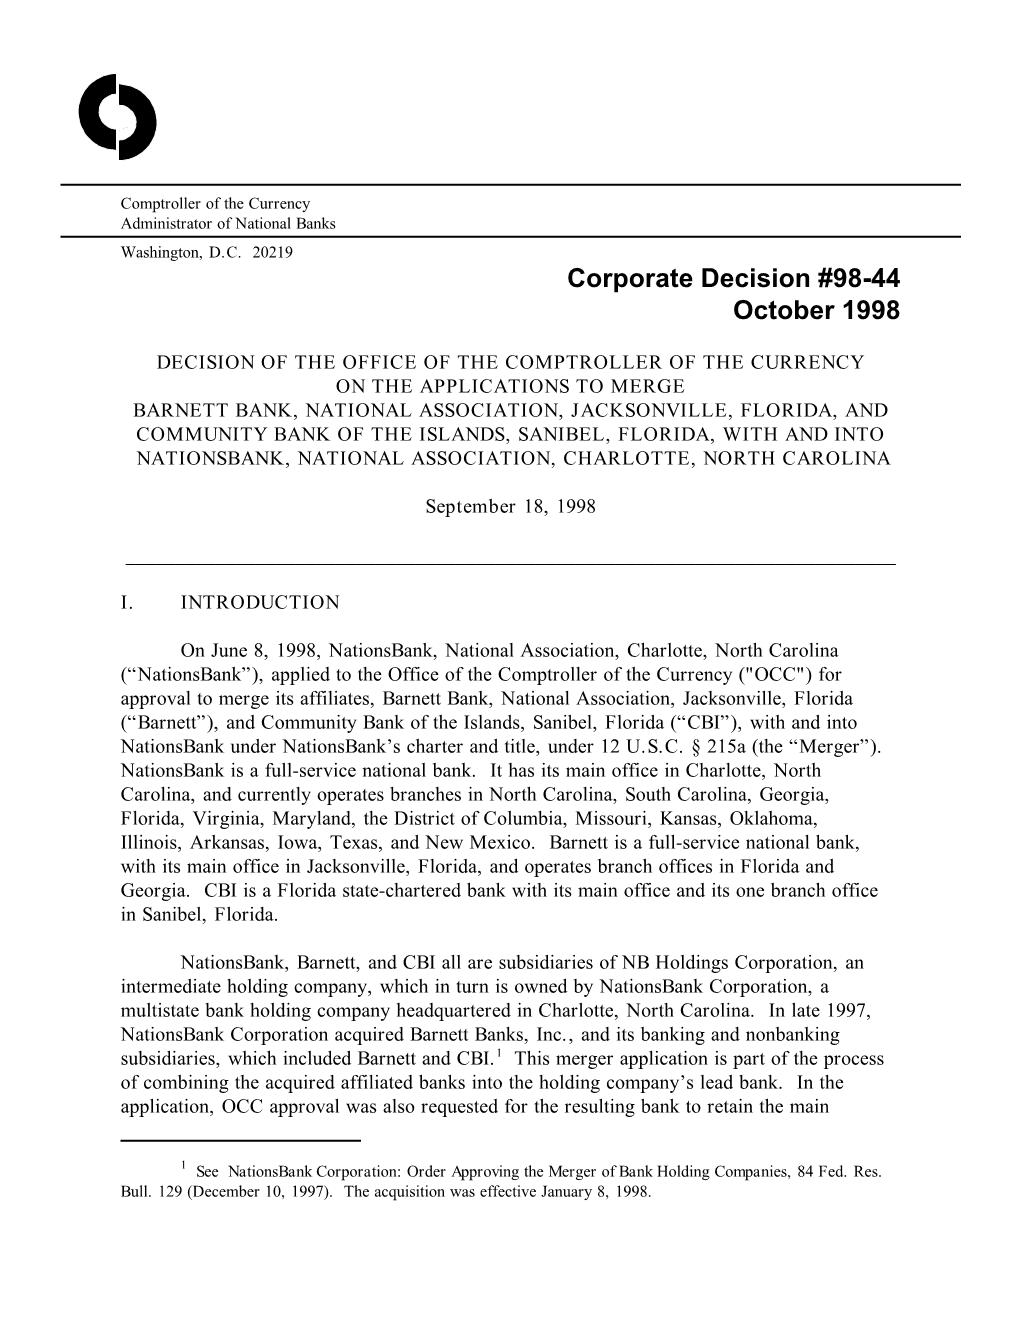 Corporate Decision #98-44 October 1998